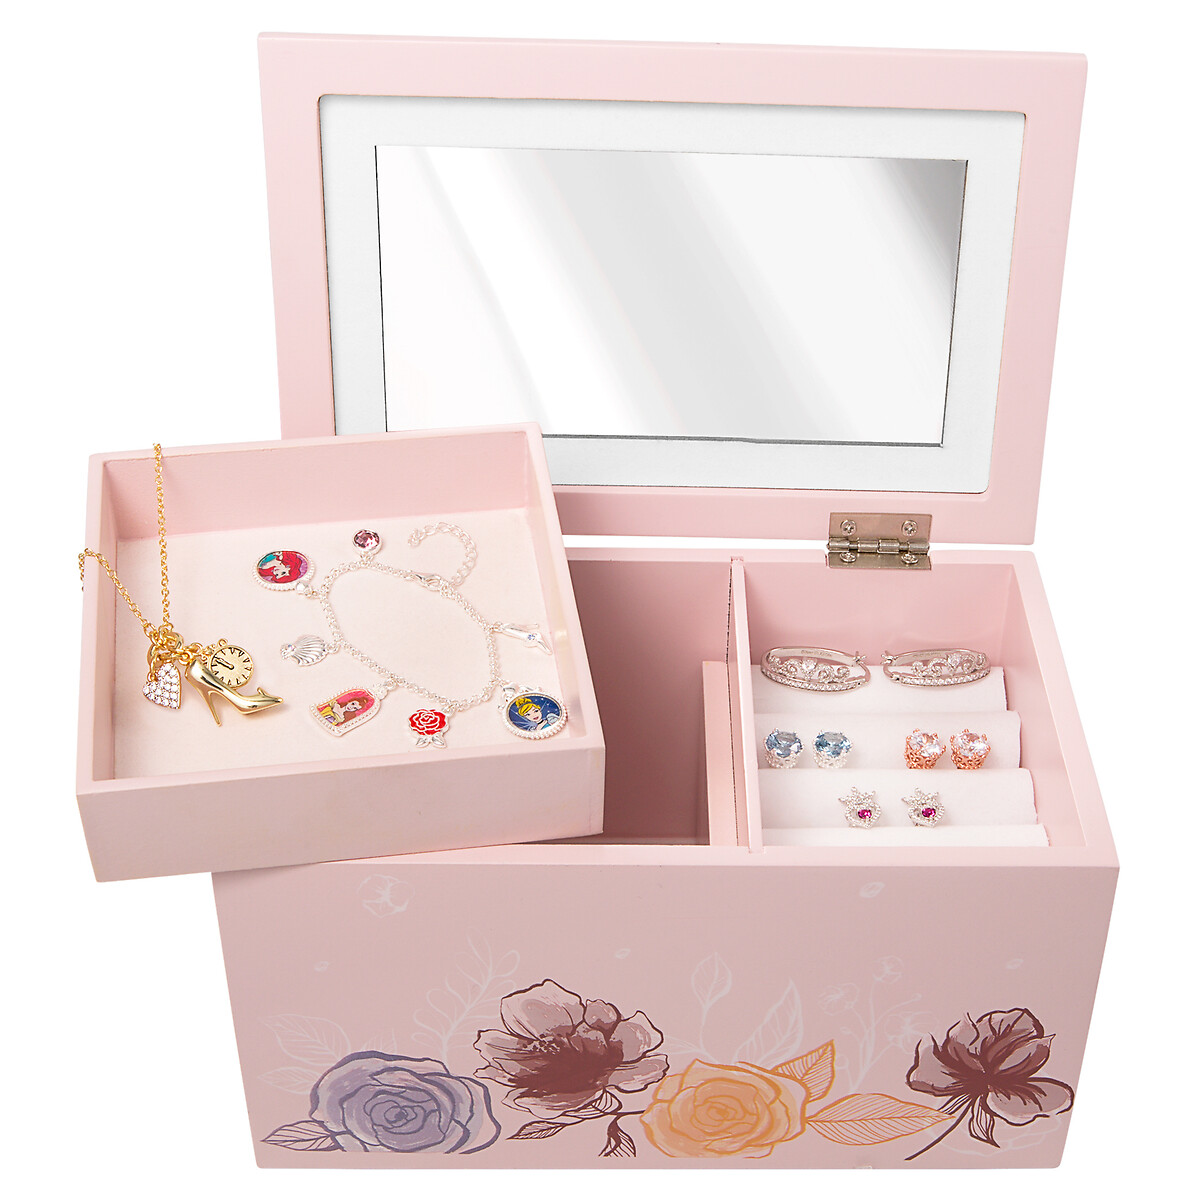 Disney princess wooden jewellery box, pink, Disney